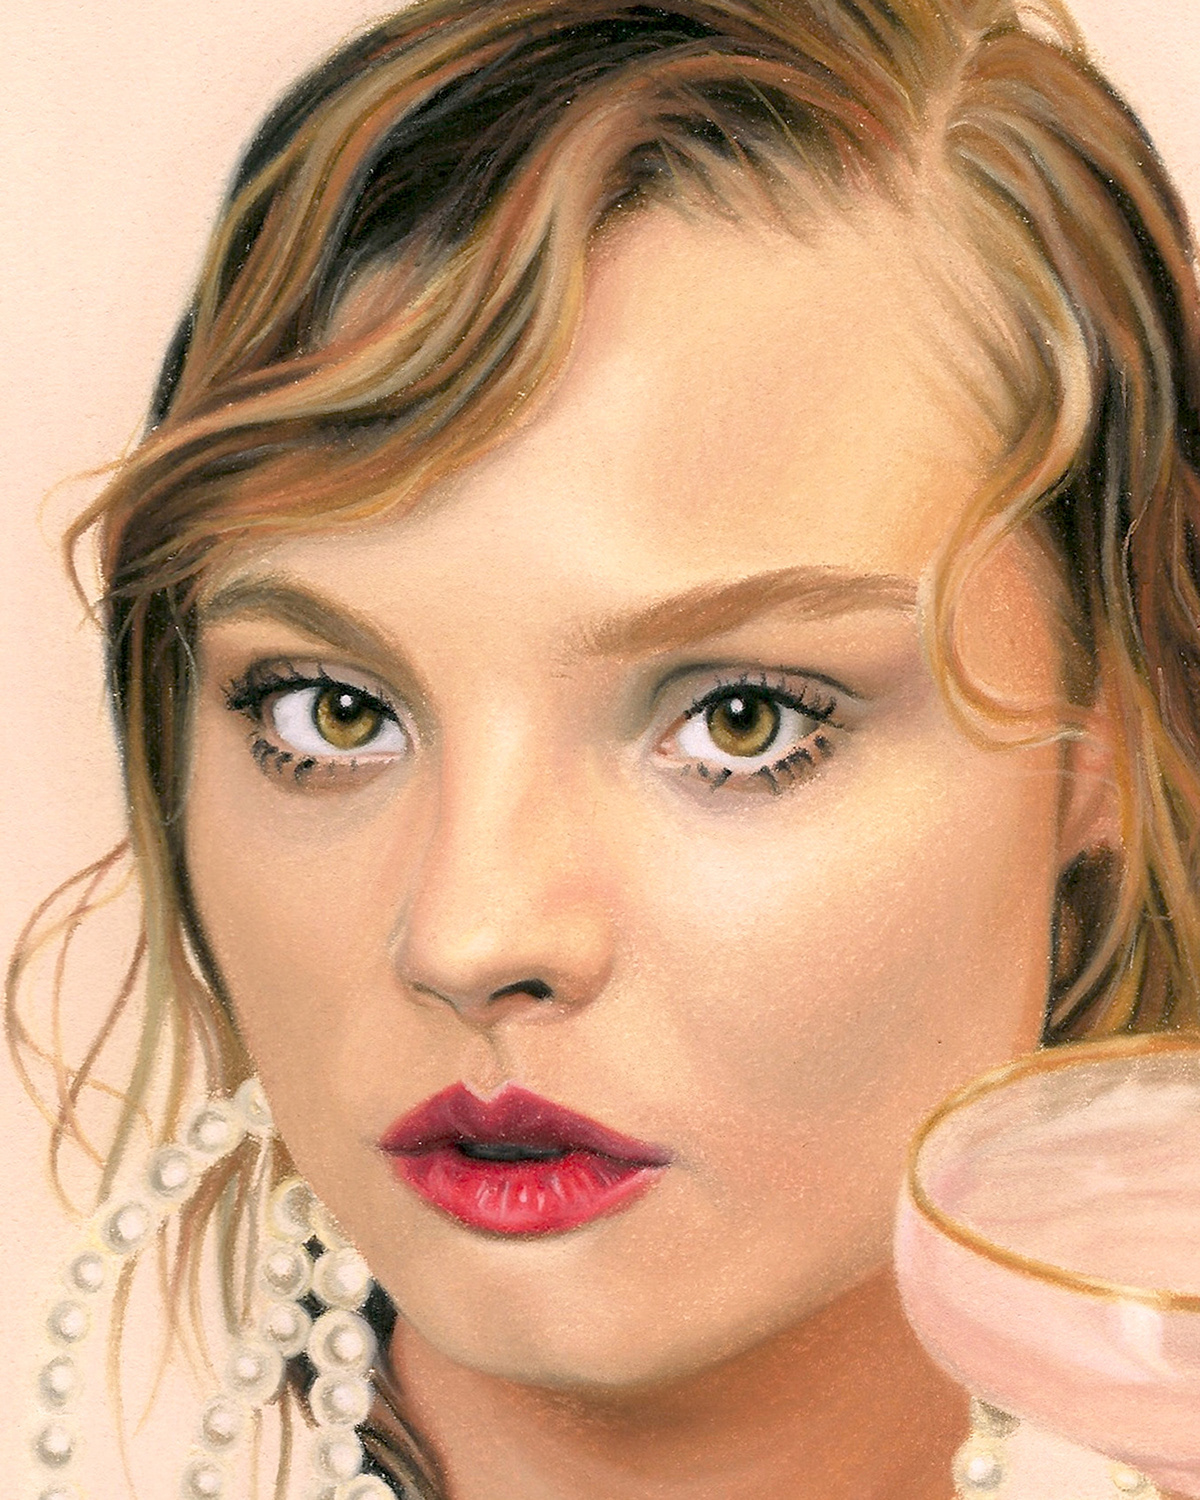 prada makeup pearls Shells Champagne portrait fashion illustration